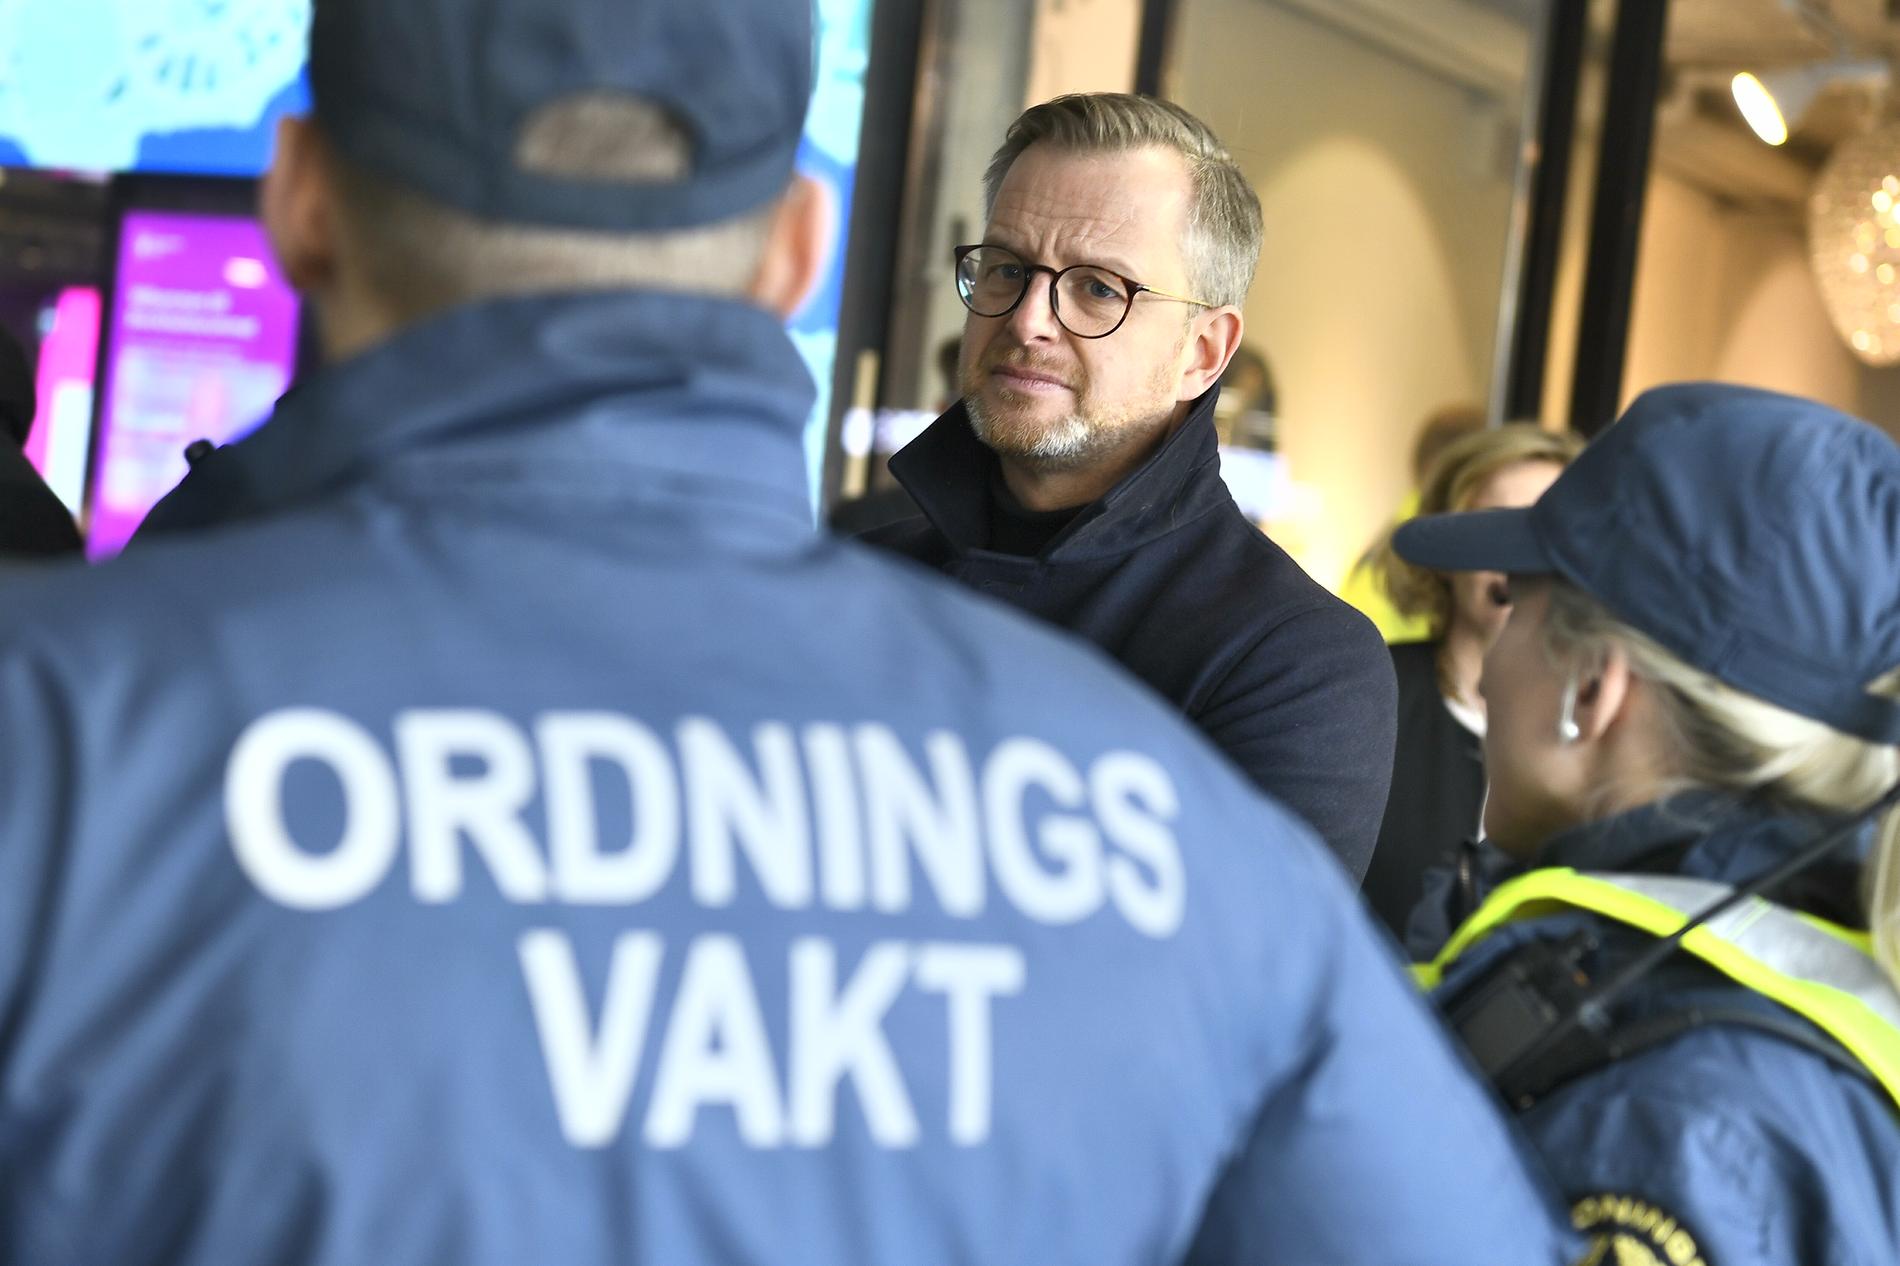 Inrikesminister Mikael Damberg (S) om nya poliserna: ”Lite som tidig julafton”